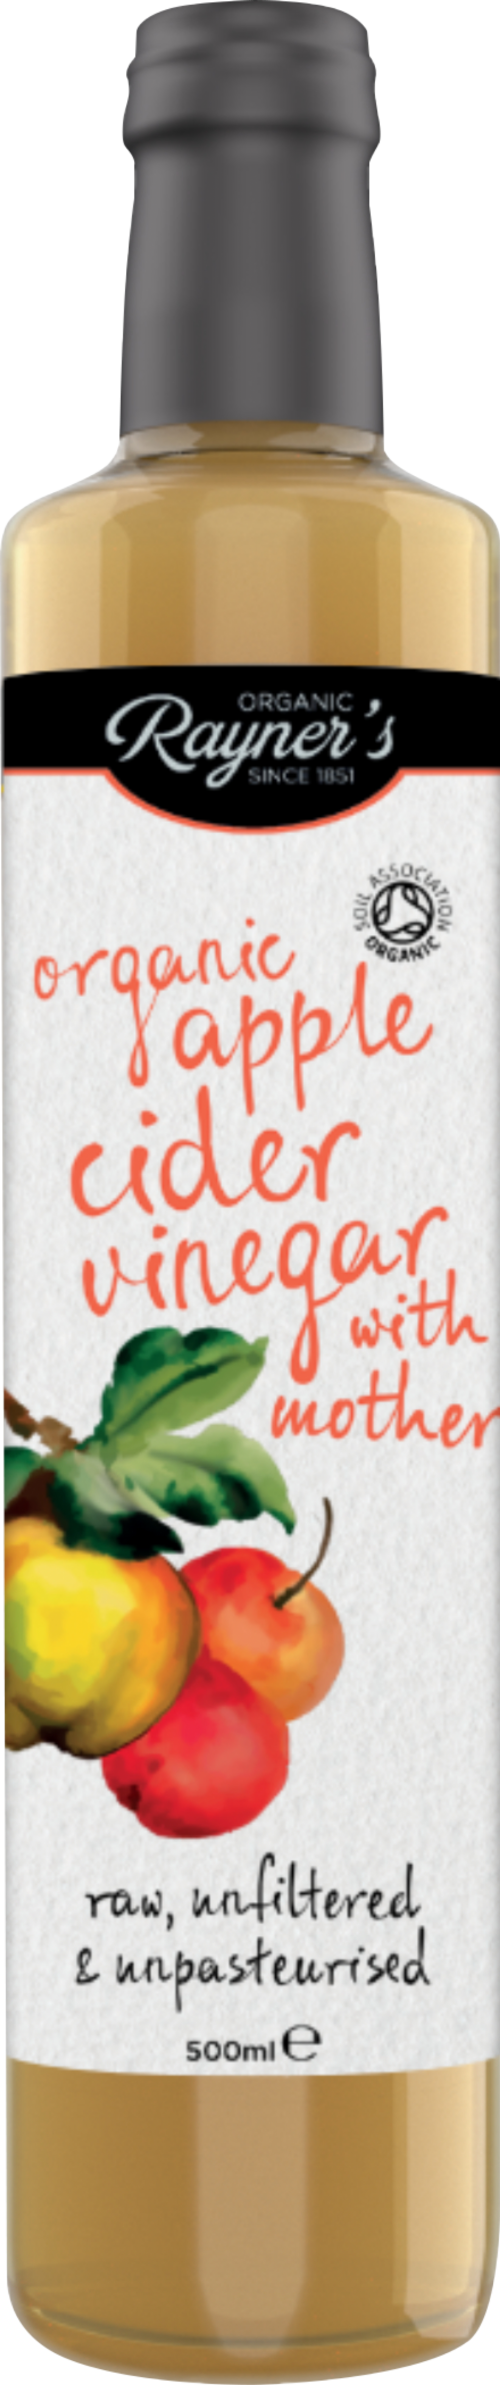 RAYNER'S Organic Apple Cider Vinegar with Mother 500ml